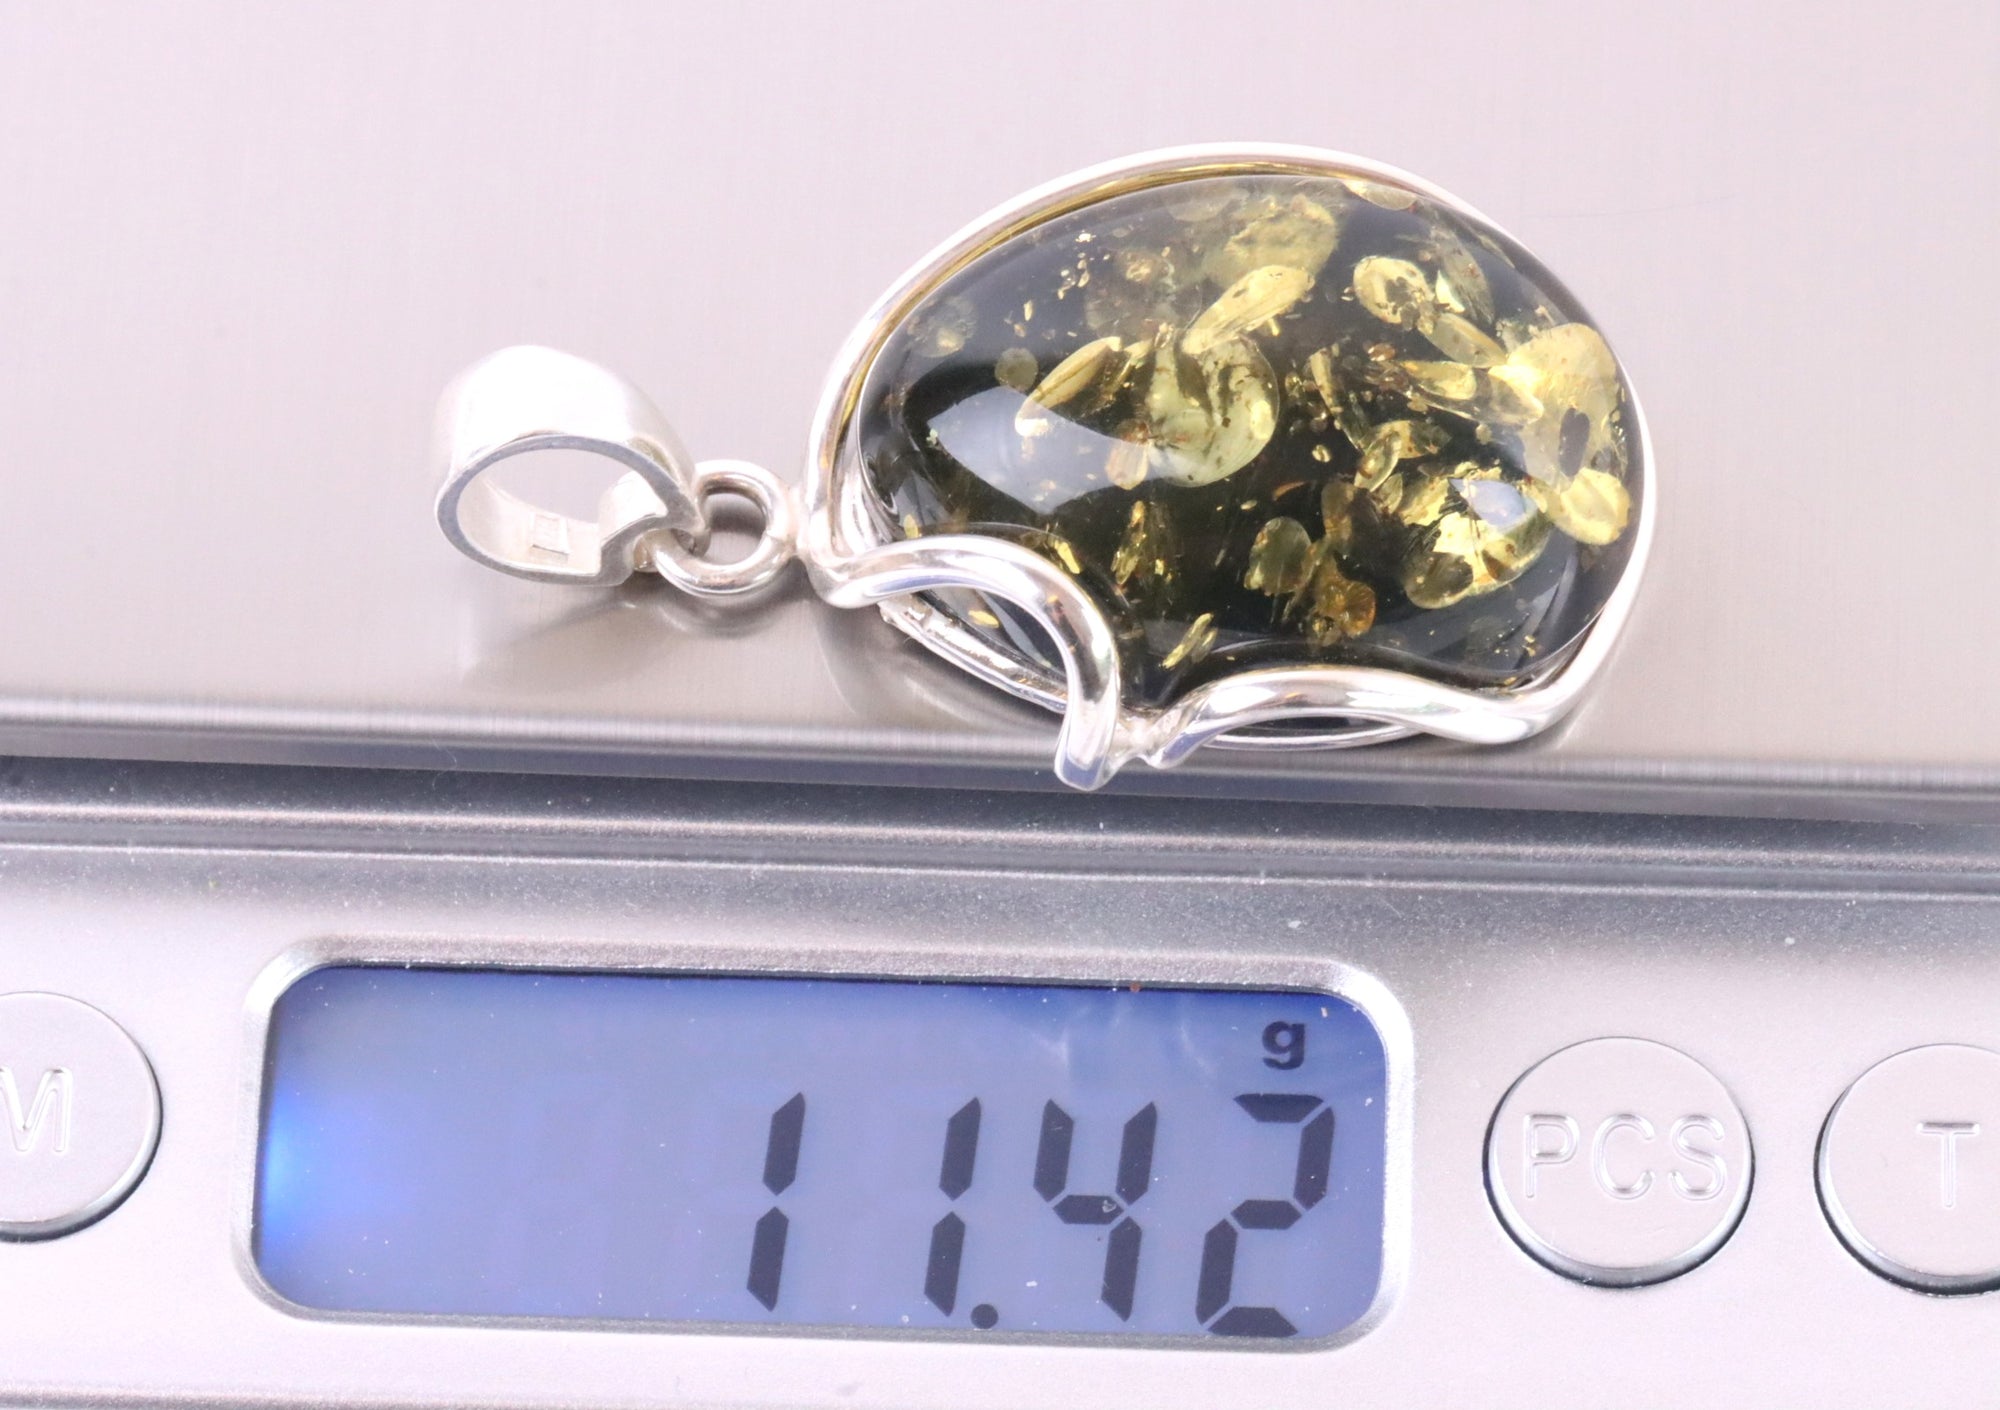 Large Handmade Green Amber Natural Gemstone Pendant